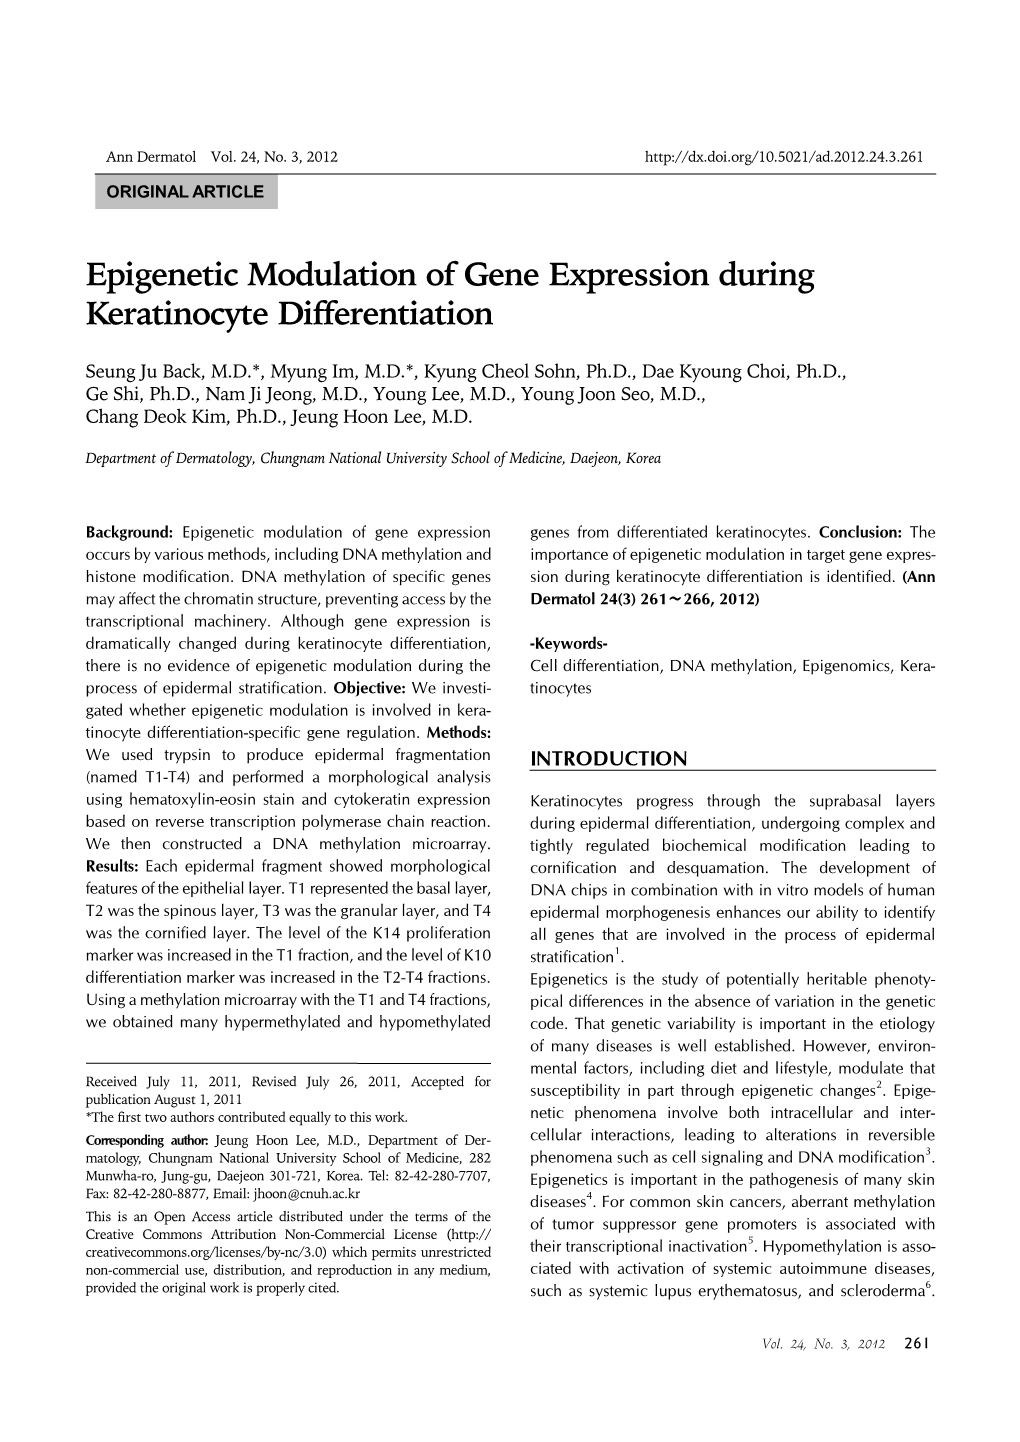 Epigenetic Modulation of Gene Expression During Keratinocyte Differentiation